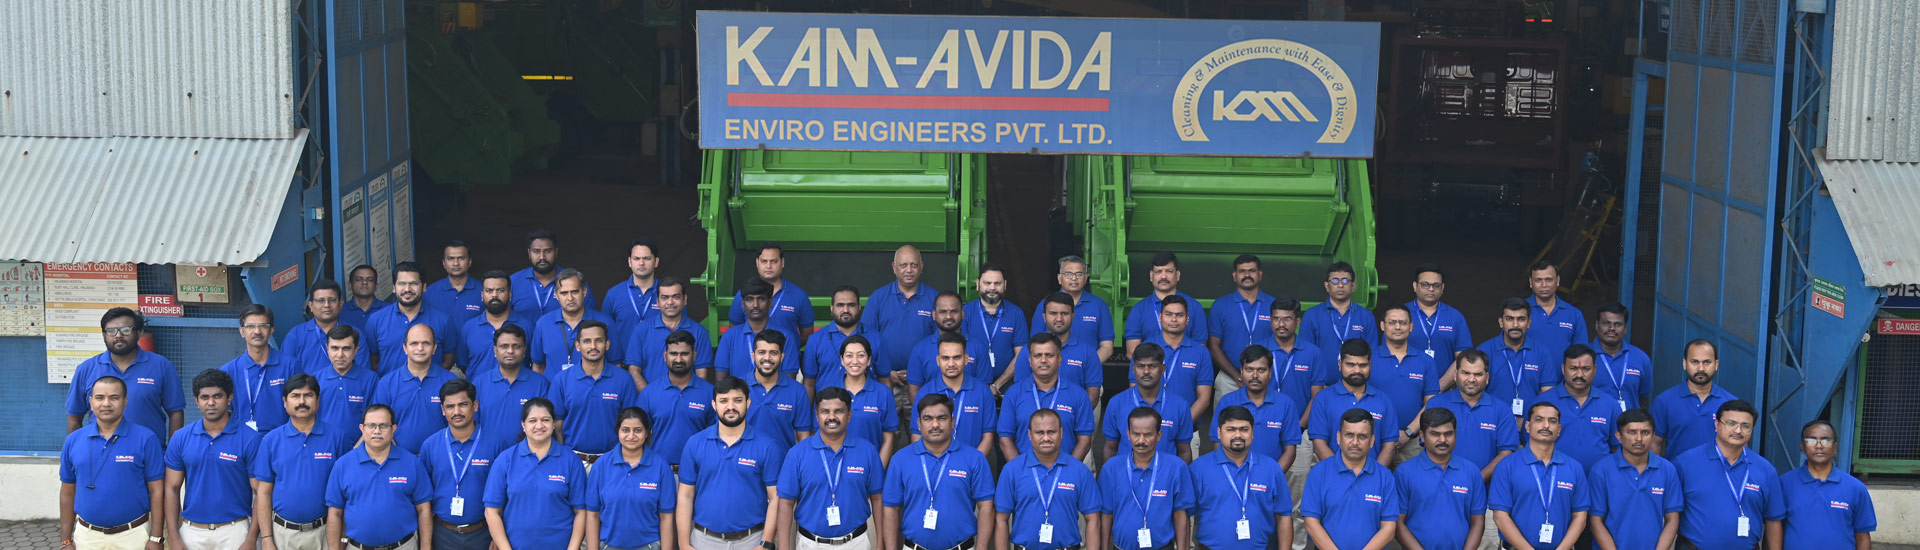 Kam Avida Team